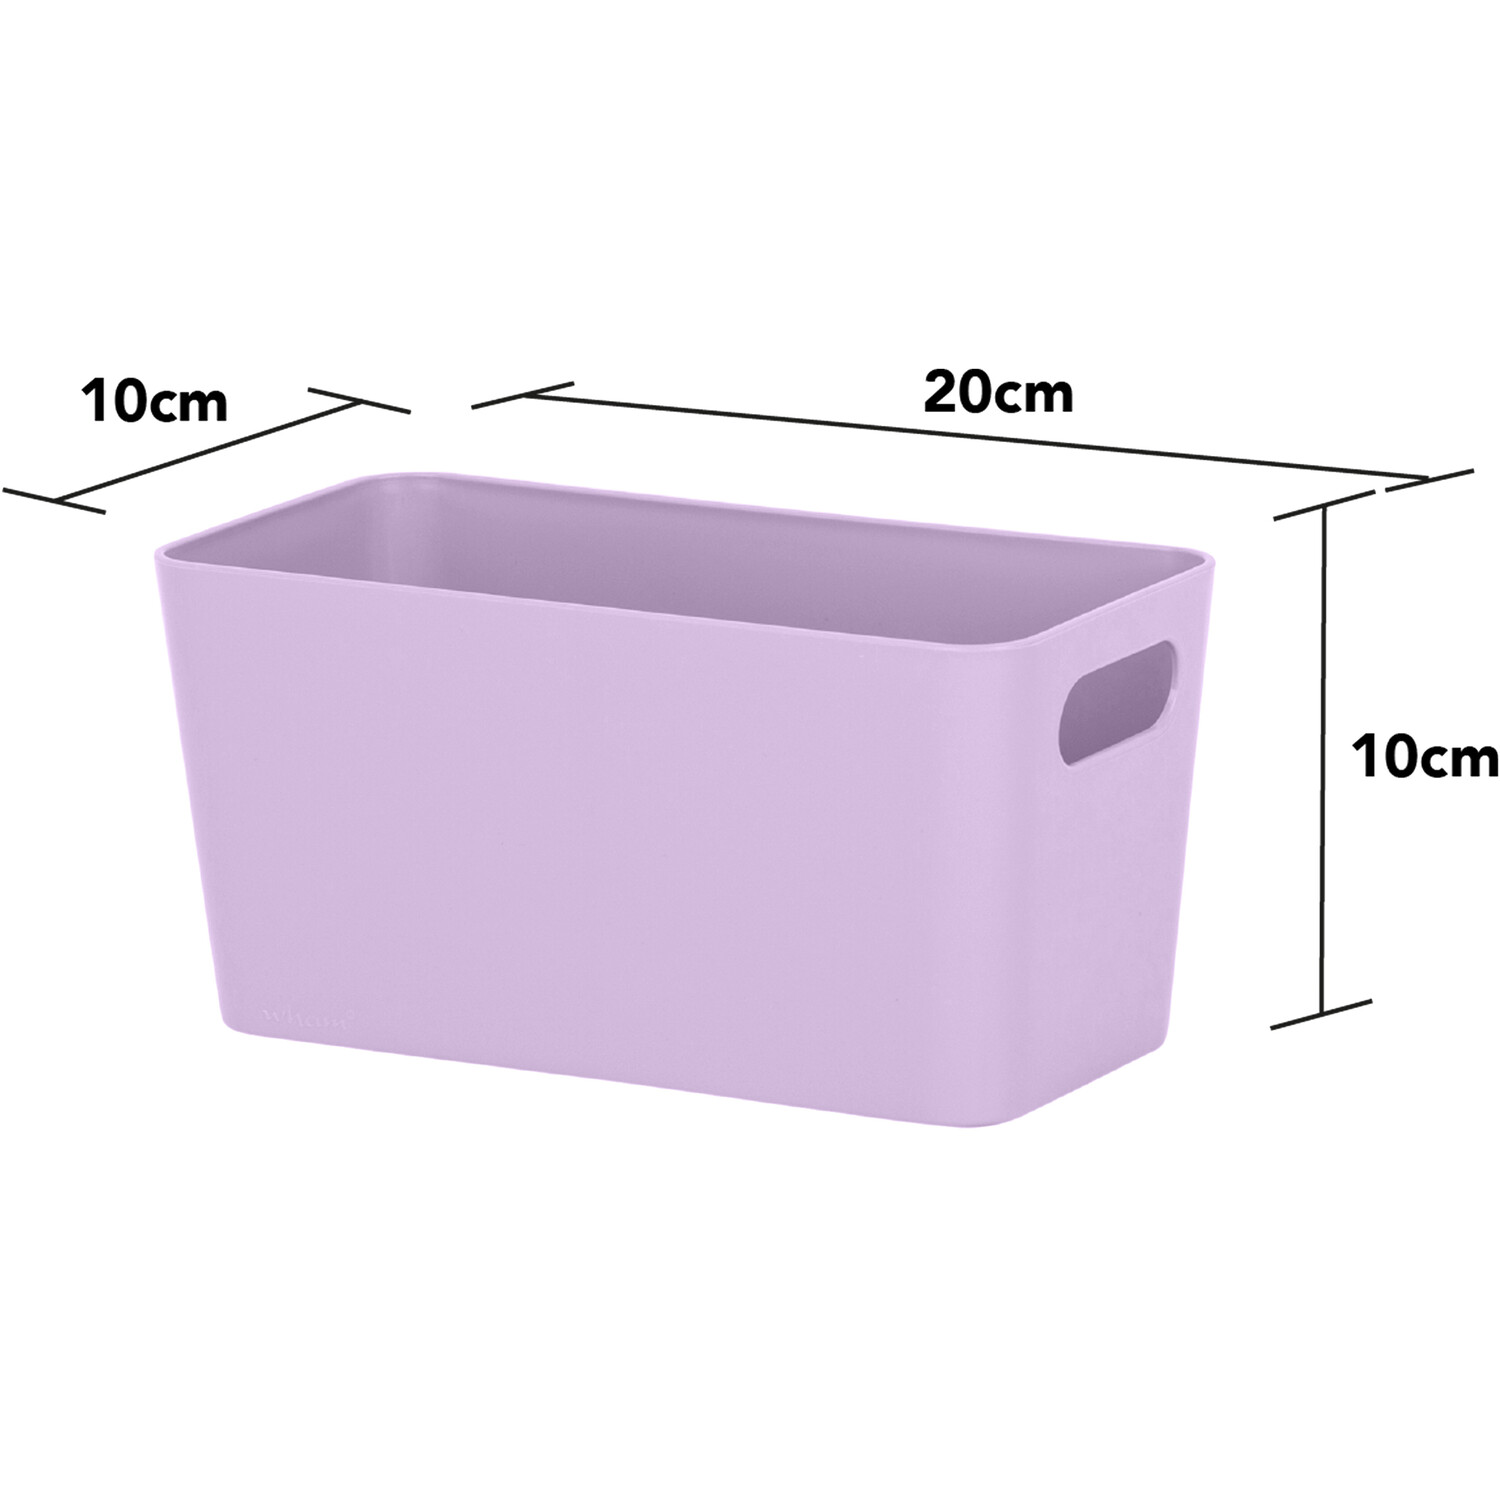 Studio Storage Basket  - Lilac / 300g Image 4